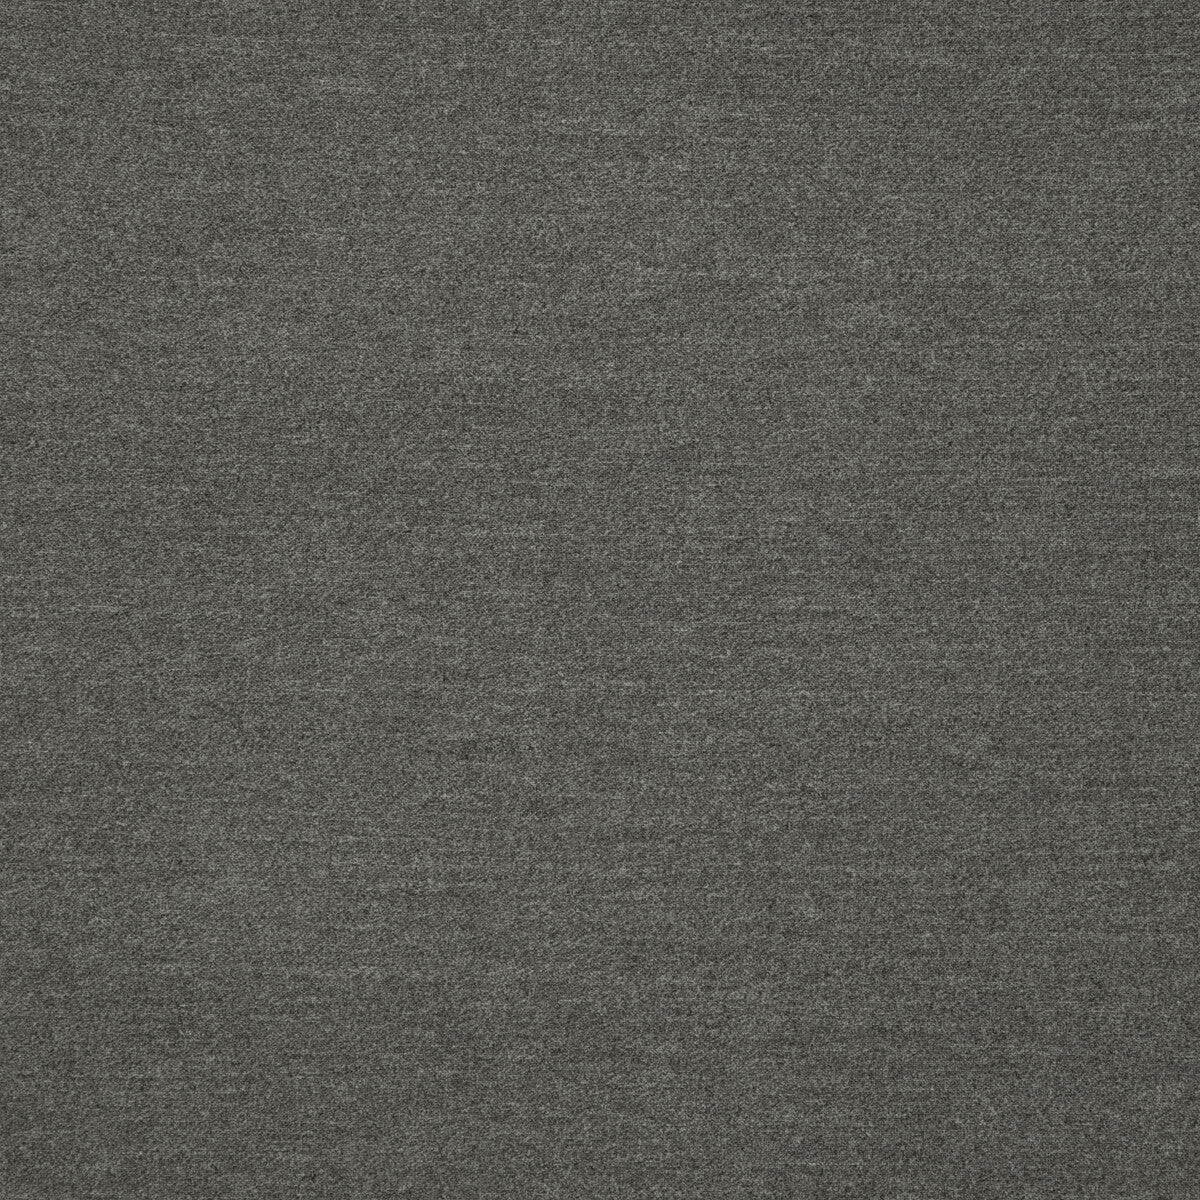 Kravet Smart fabric in 37000-2111 color - pattern 37000.2111.0 - by Kravet Smart in the Performance Kravetarmor collection